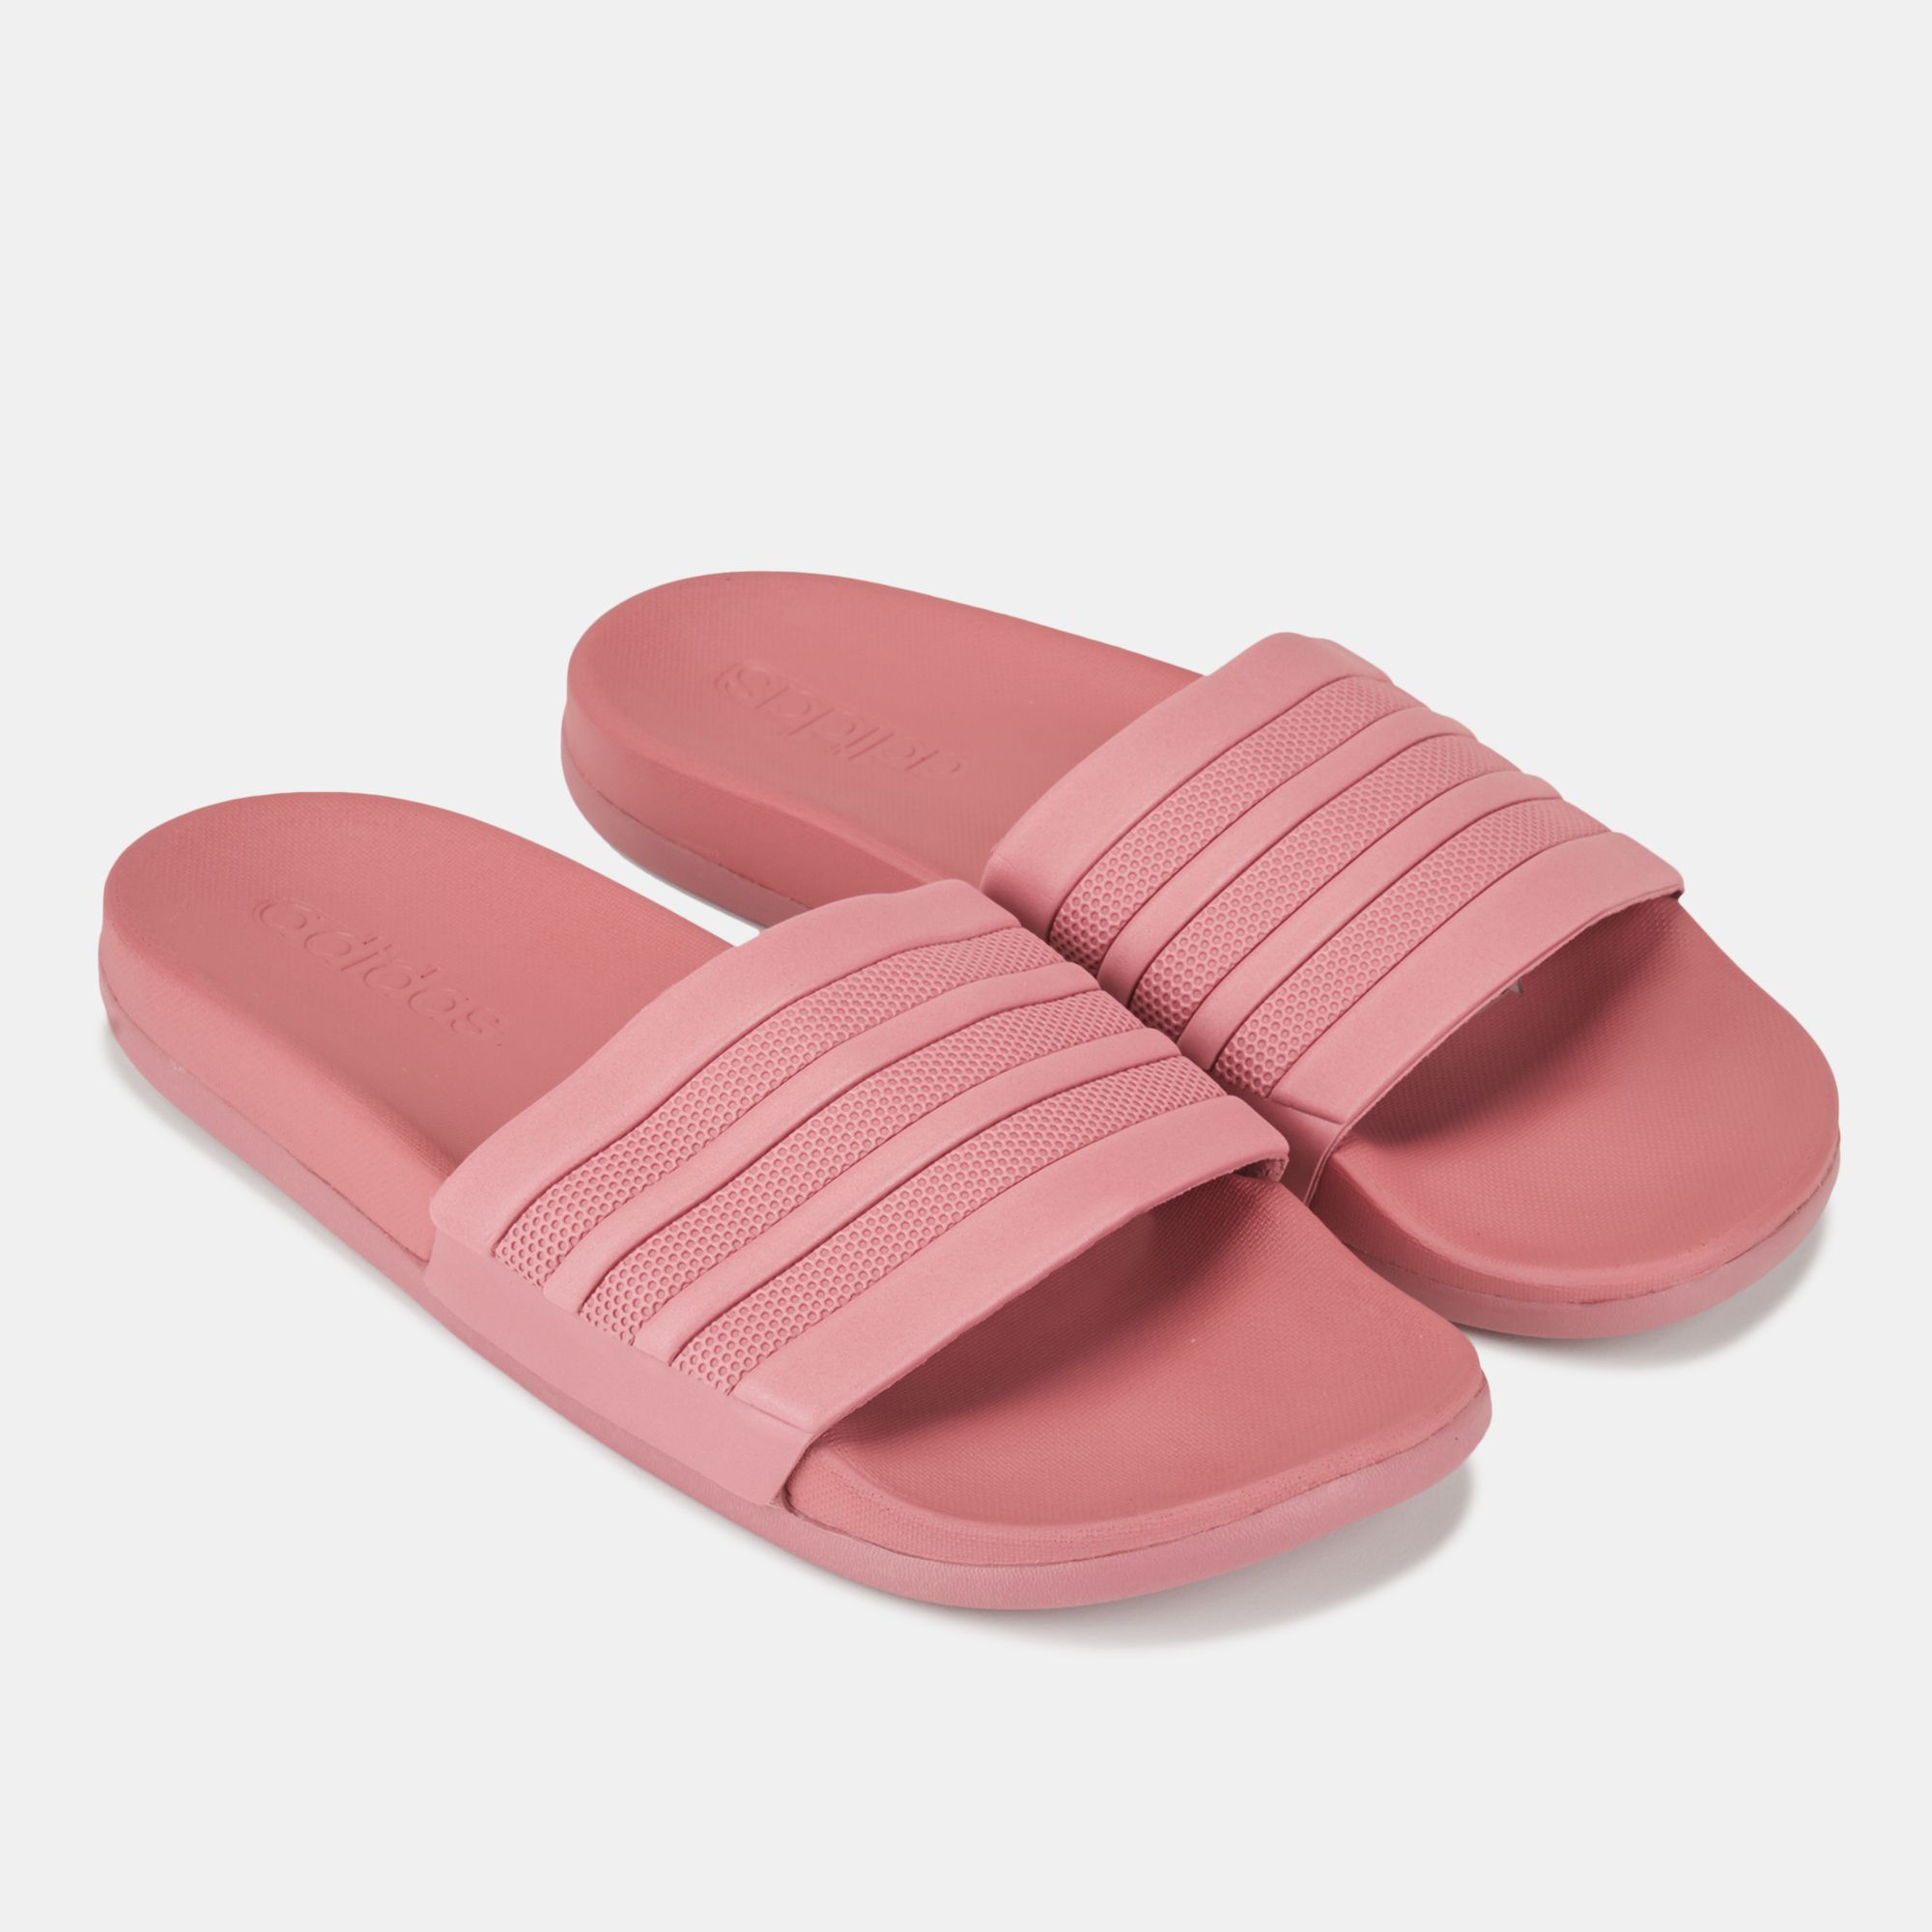 cloudfoam pink adidas